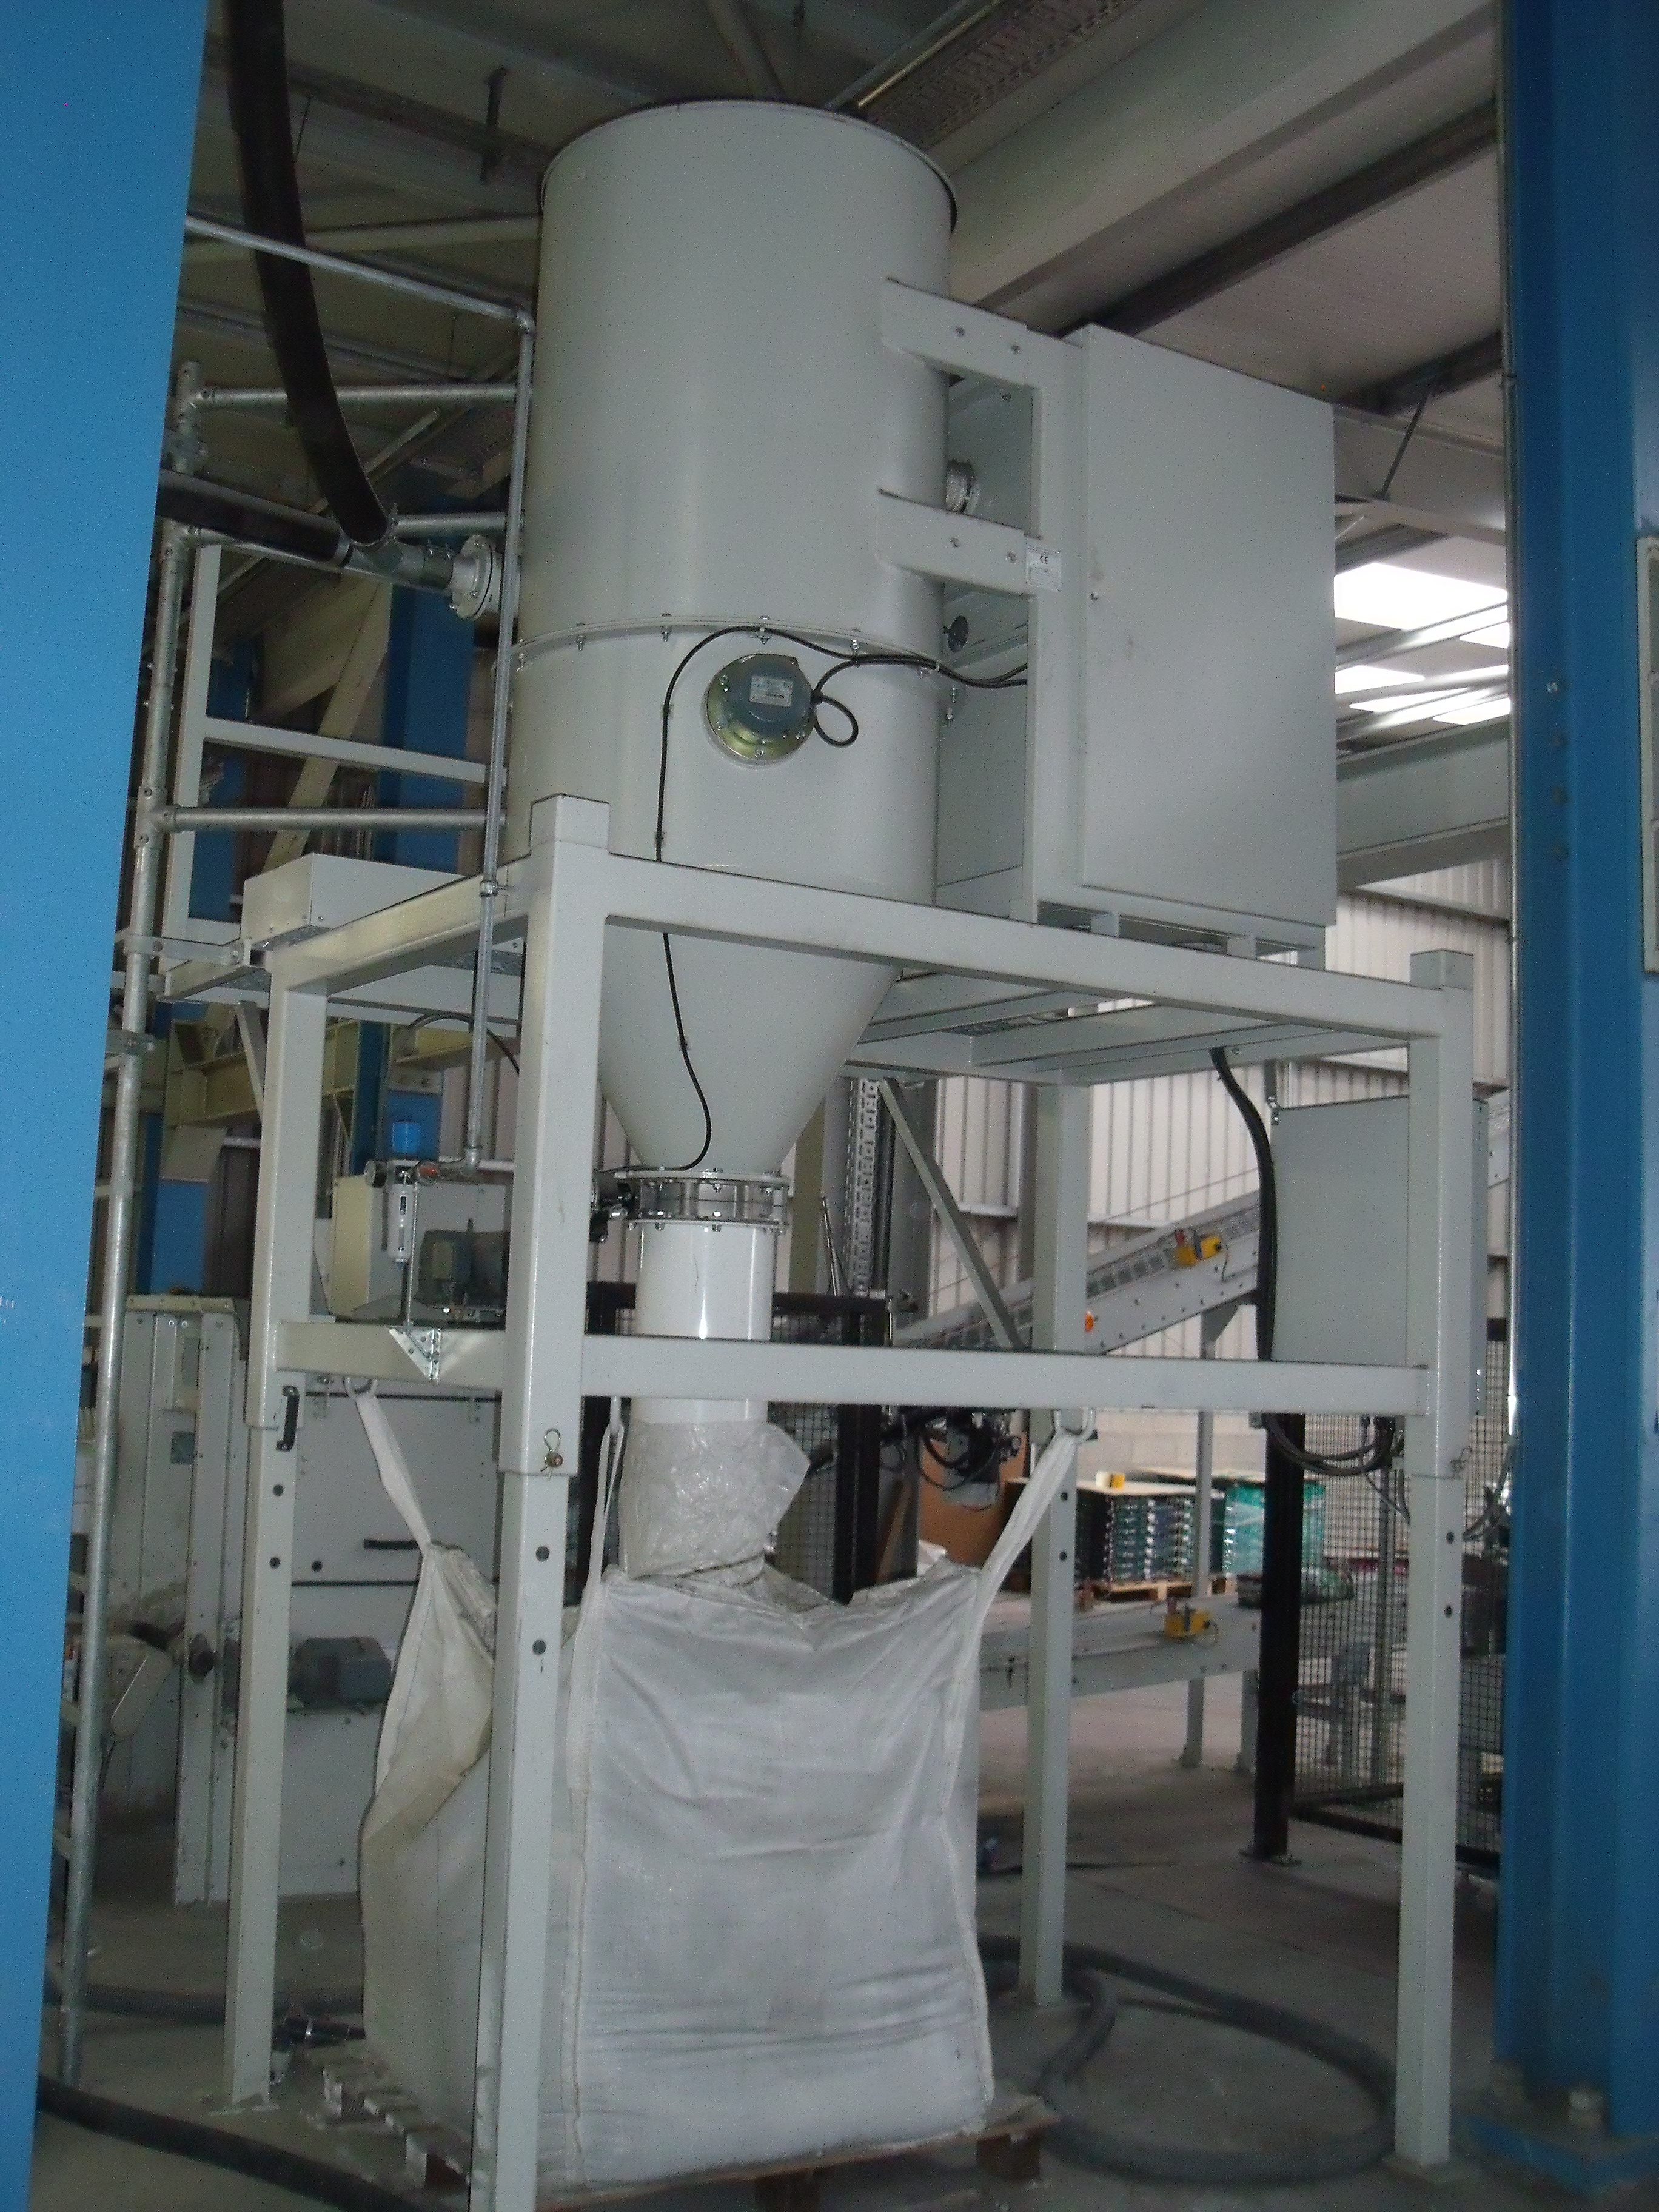 Beam Industrial Vacuum and bulk collection unit in Larsen factory